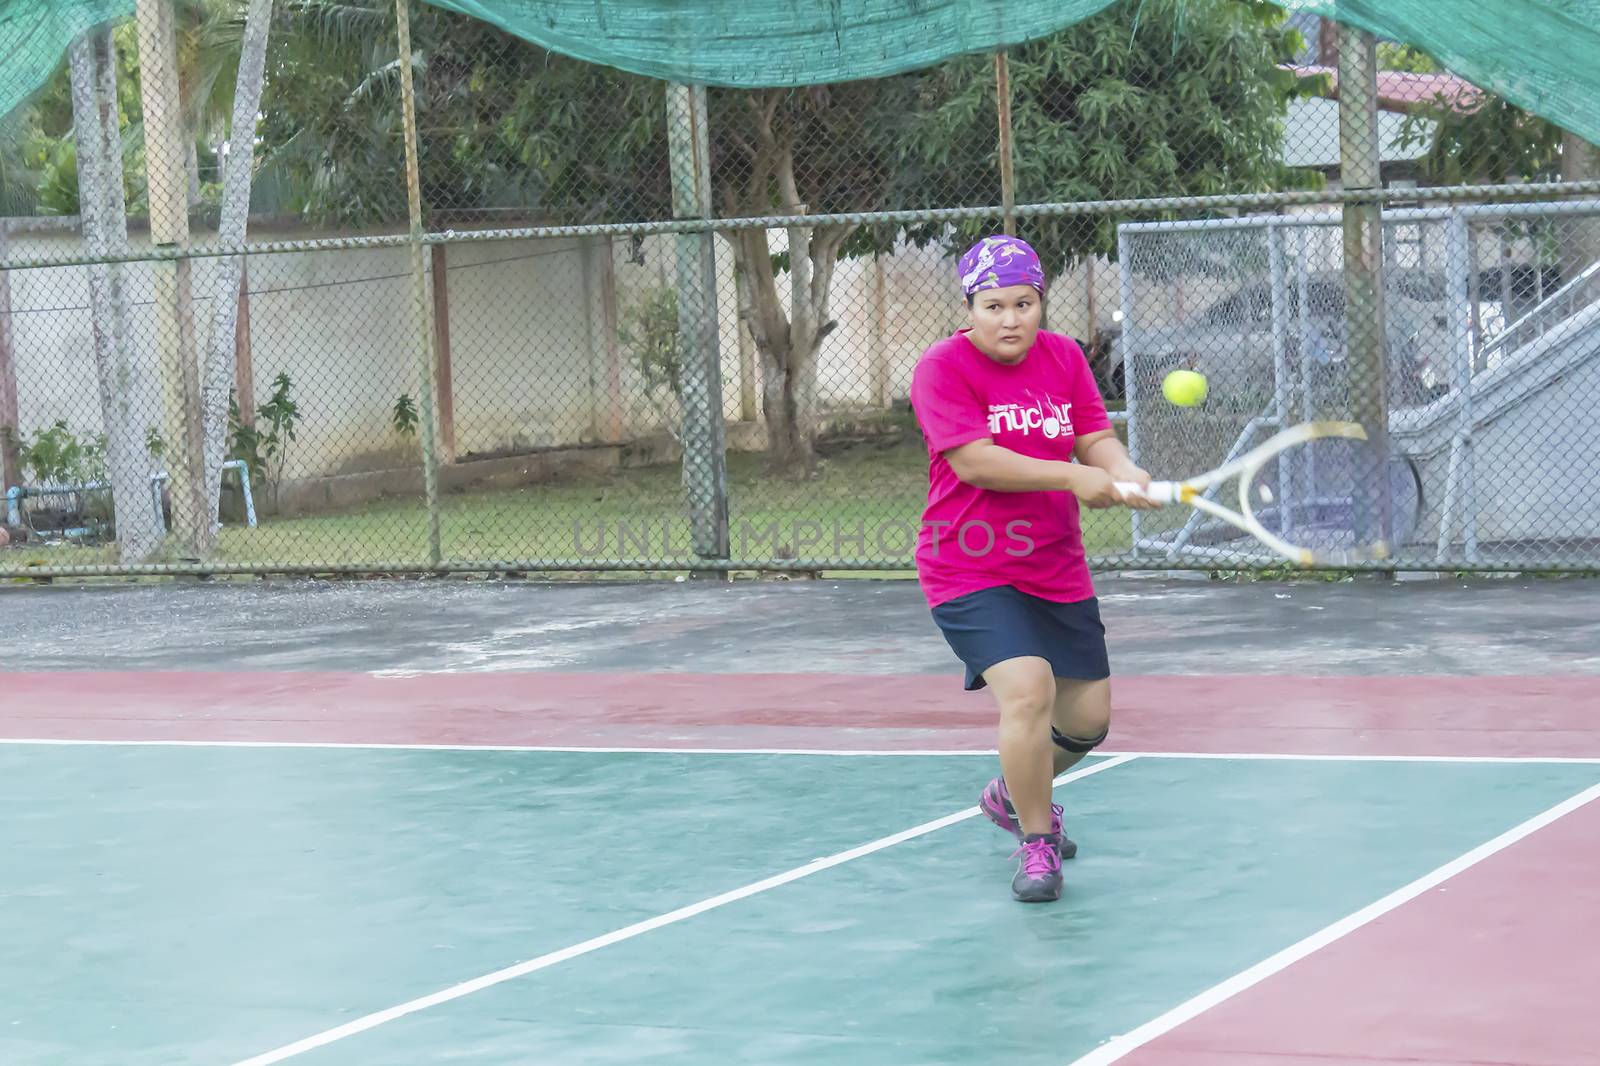 SURAT THANI, THAILAND - MARCH 1:Unidentified Thai senior woman play tennis outdoor at Chaiya tennis court on March 1, 2014 in Surat Thani, Thailand.